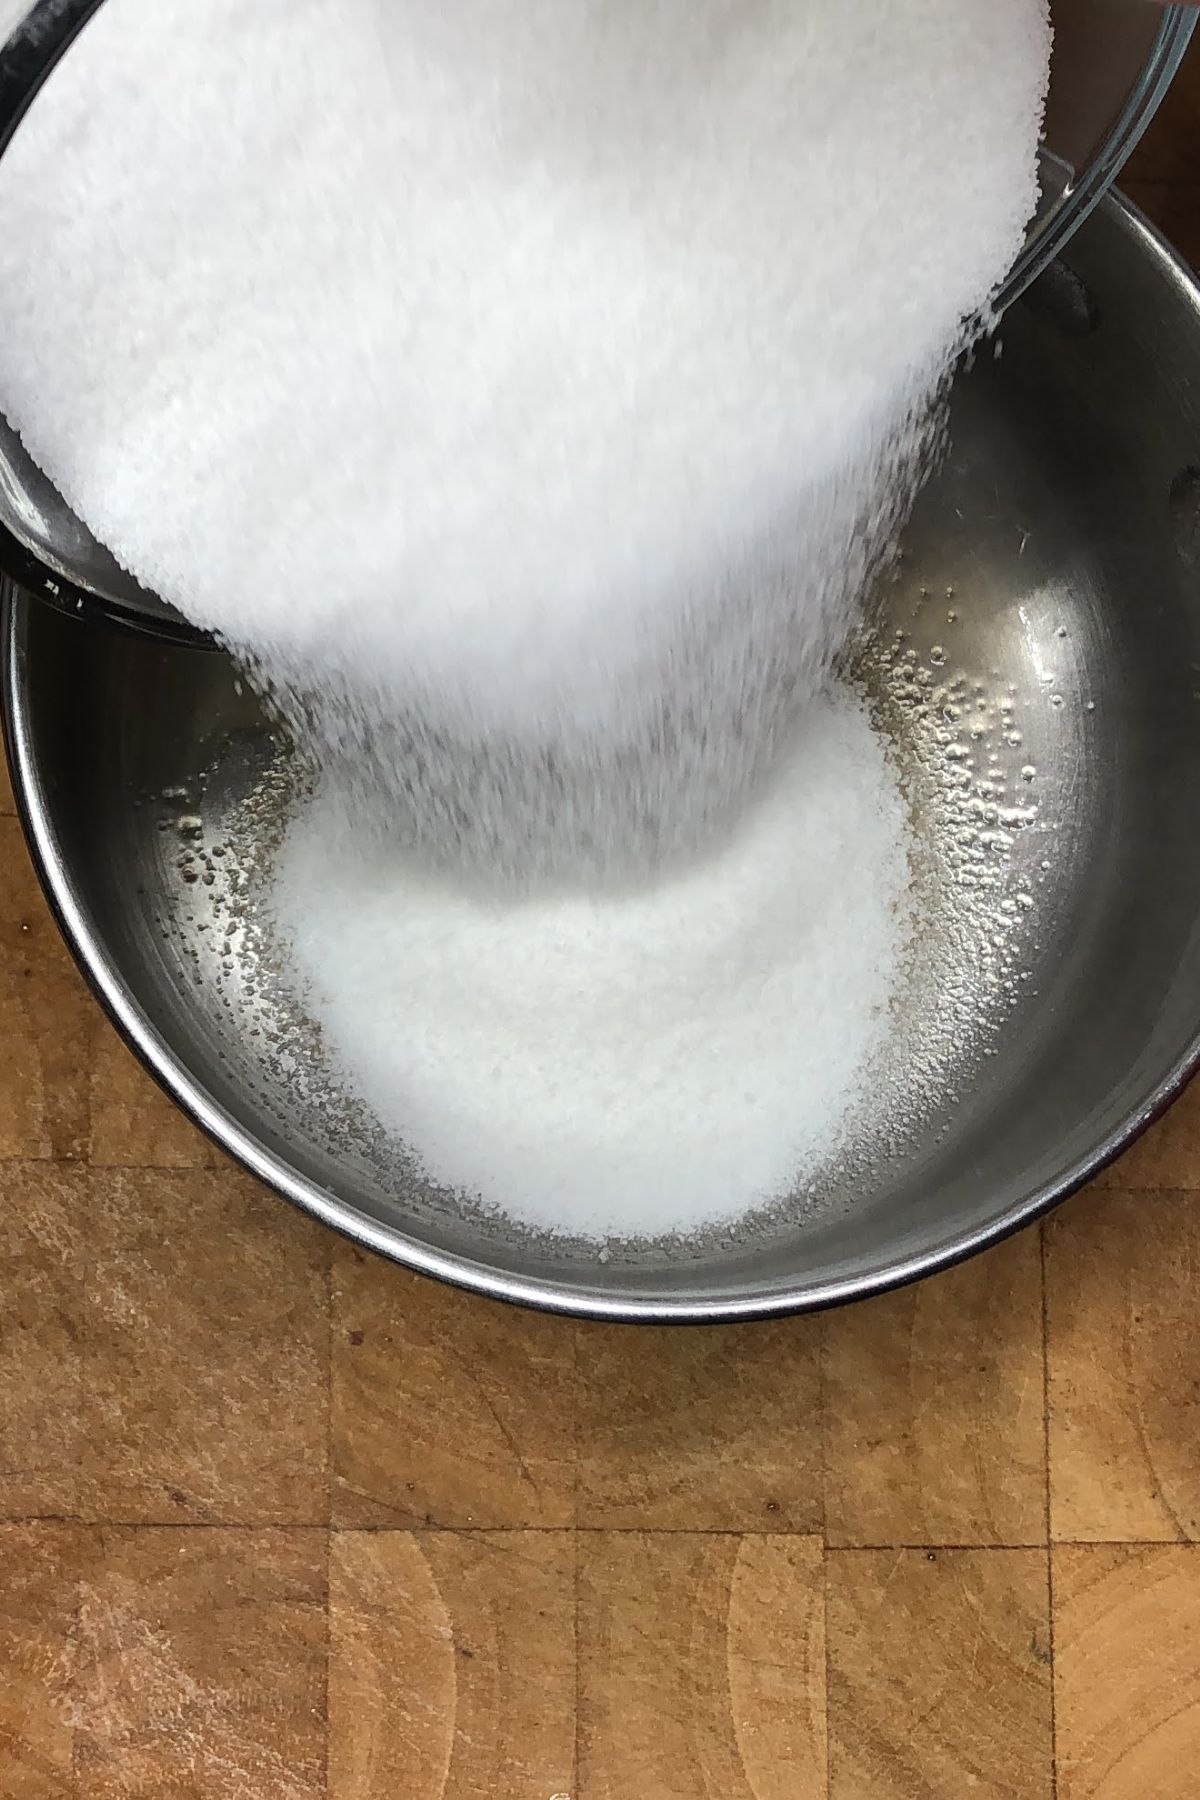 Pouring sugar into a saucepan with vanilla.